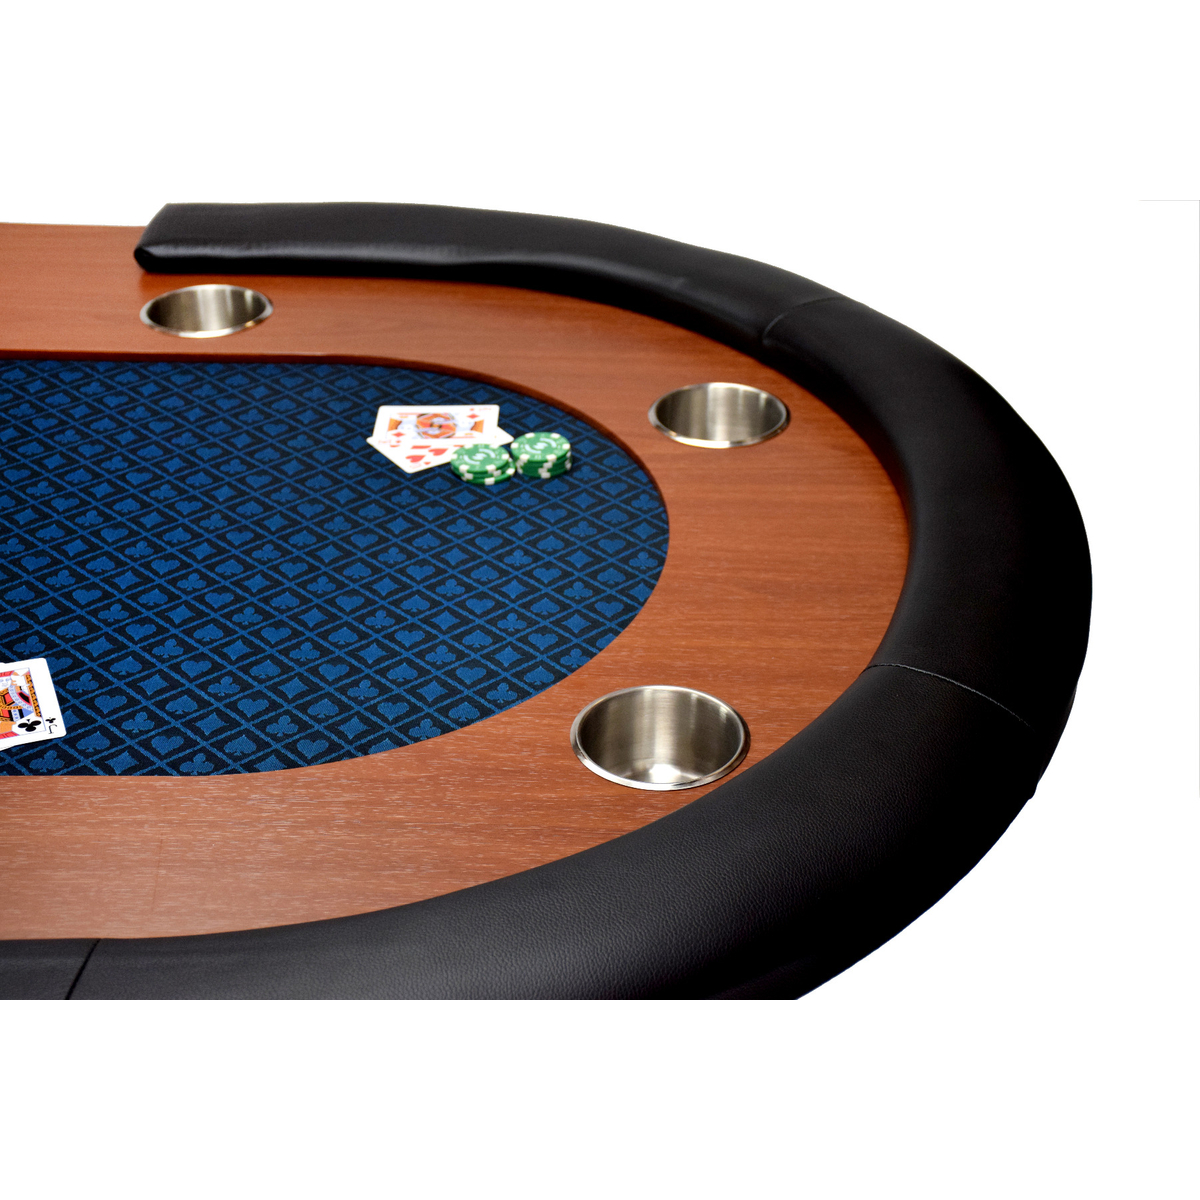 North Poker Table Nevada 10 personnes Bleu